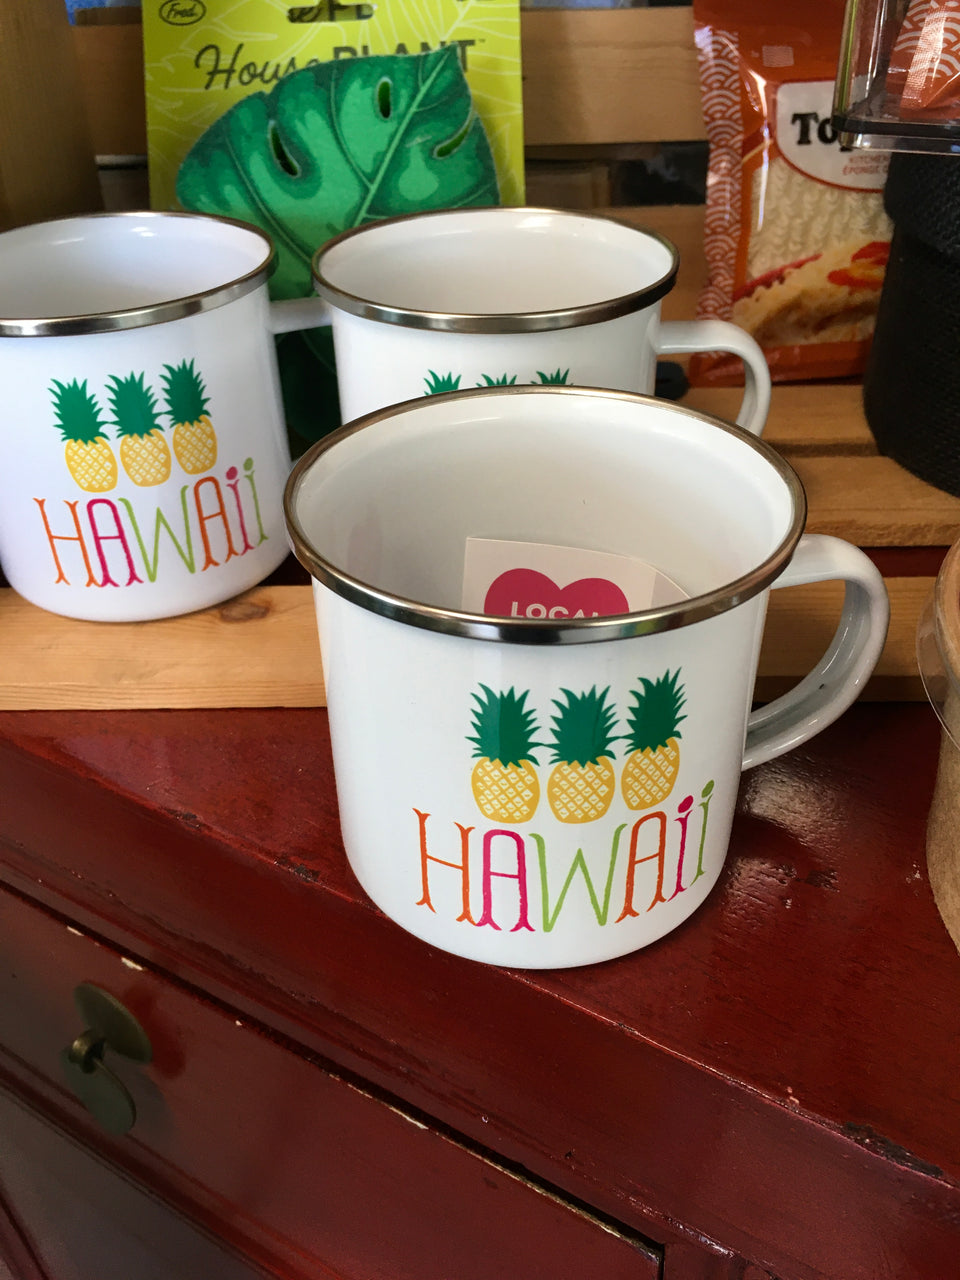 Hawaii pineapple mugs in a display